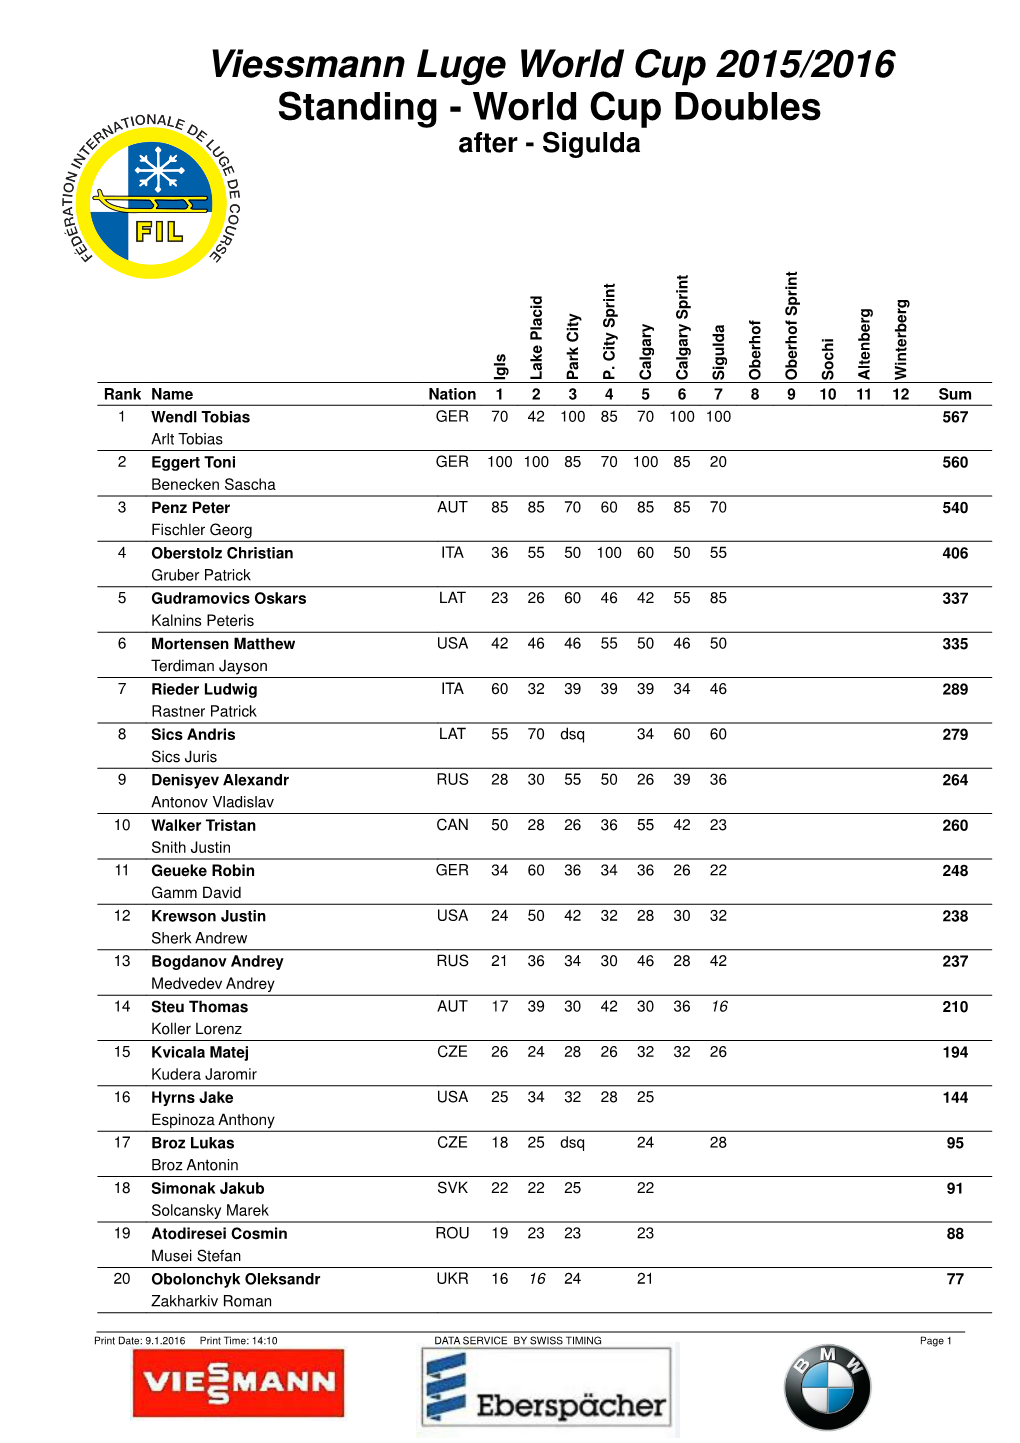 Viessmann Luge World Cup 2015/2016 Standing